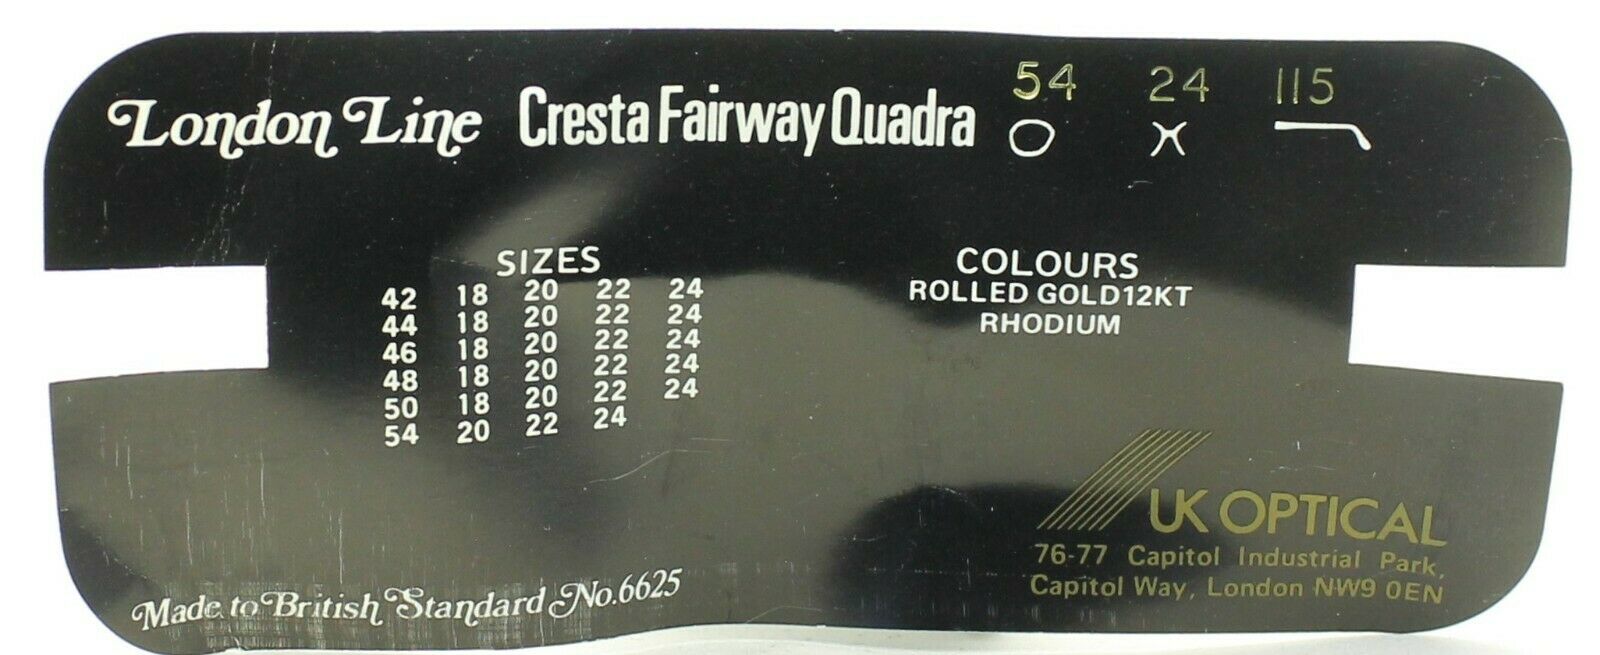 LONDON LINE (SAVILE ROW) Cresta Fairway Quadra 54x24mm Rhodium RX Optical - NOS